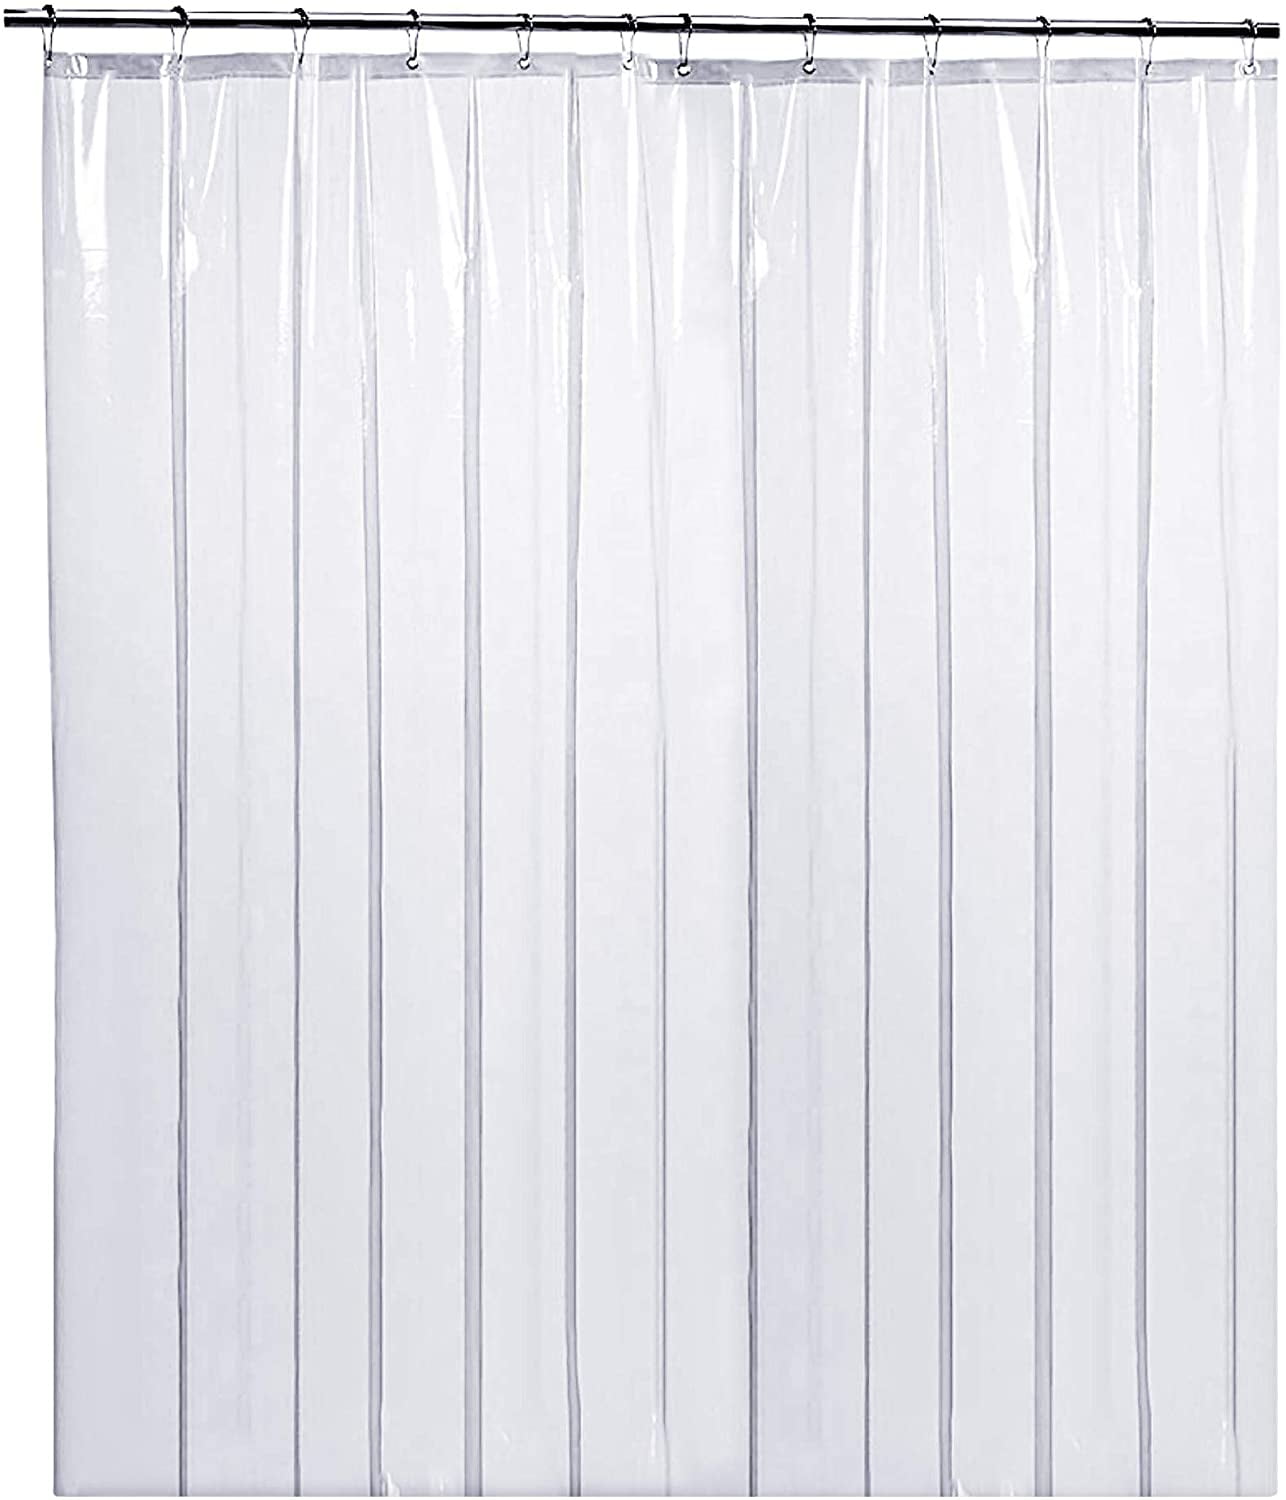 Liba Peva 8g Bathroom Shower Curtain, Clear Plastic Shower Curtain Liner Target